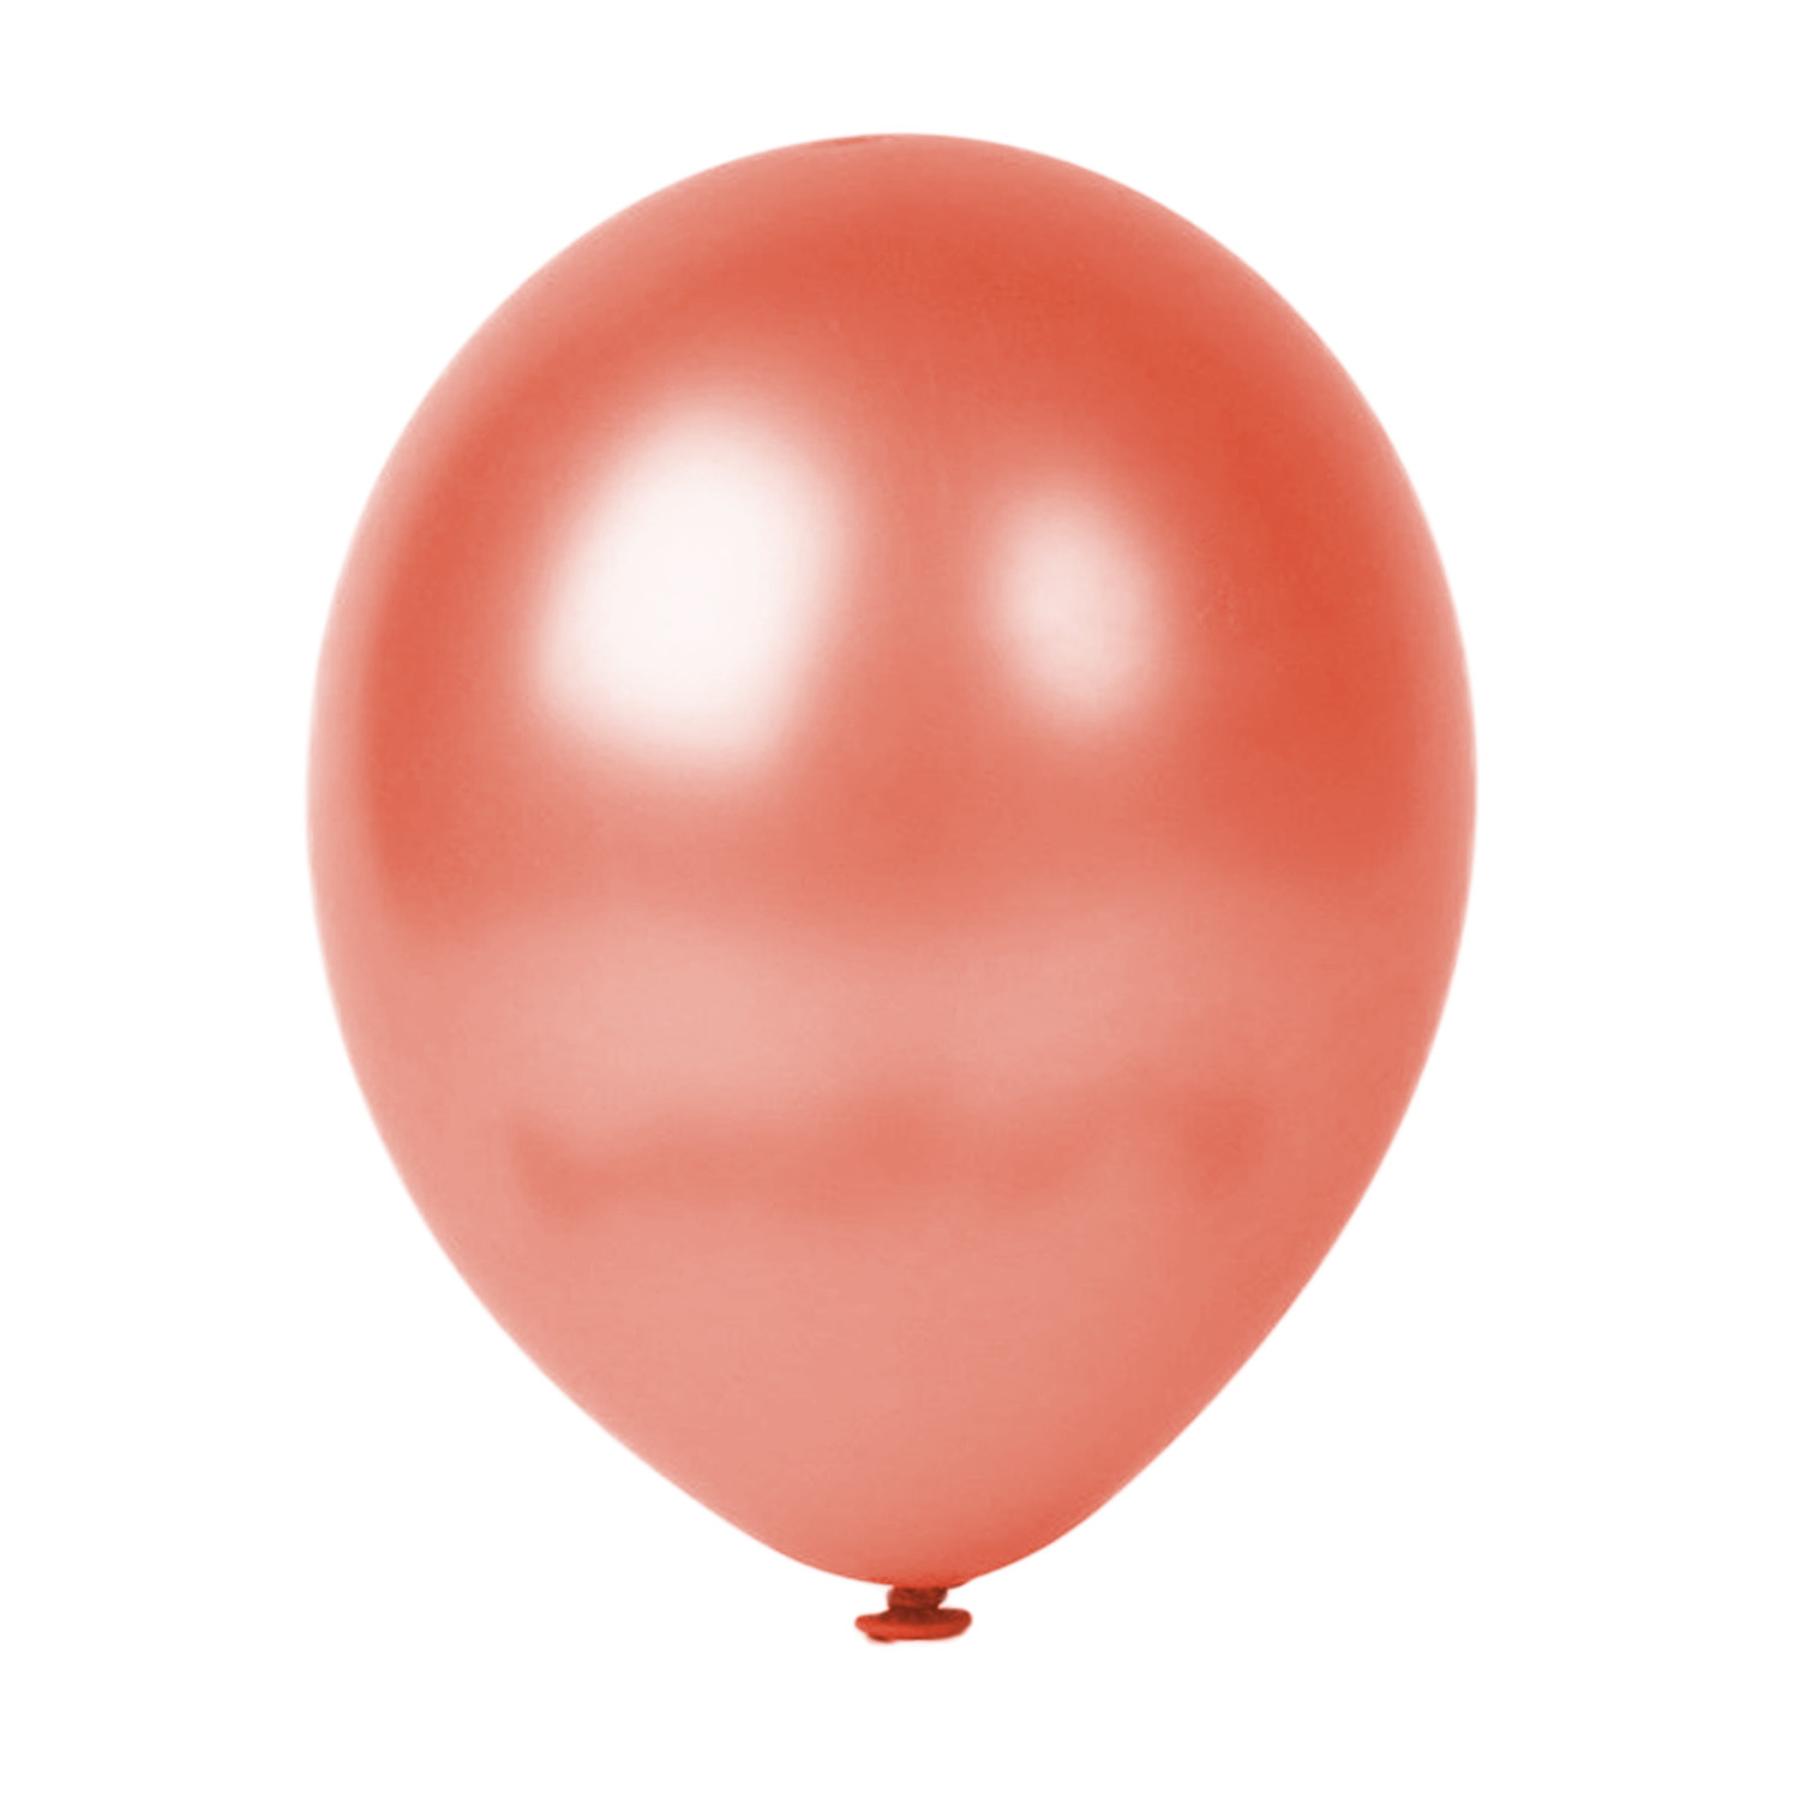 25er SET - Latex Luftballon - 12inch - Rotorange - hell - Metallic (glänzend)